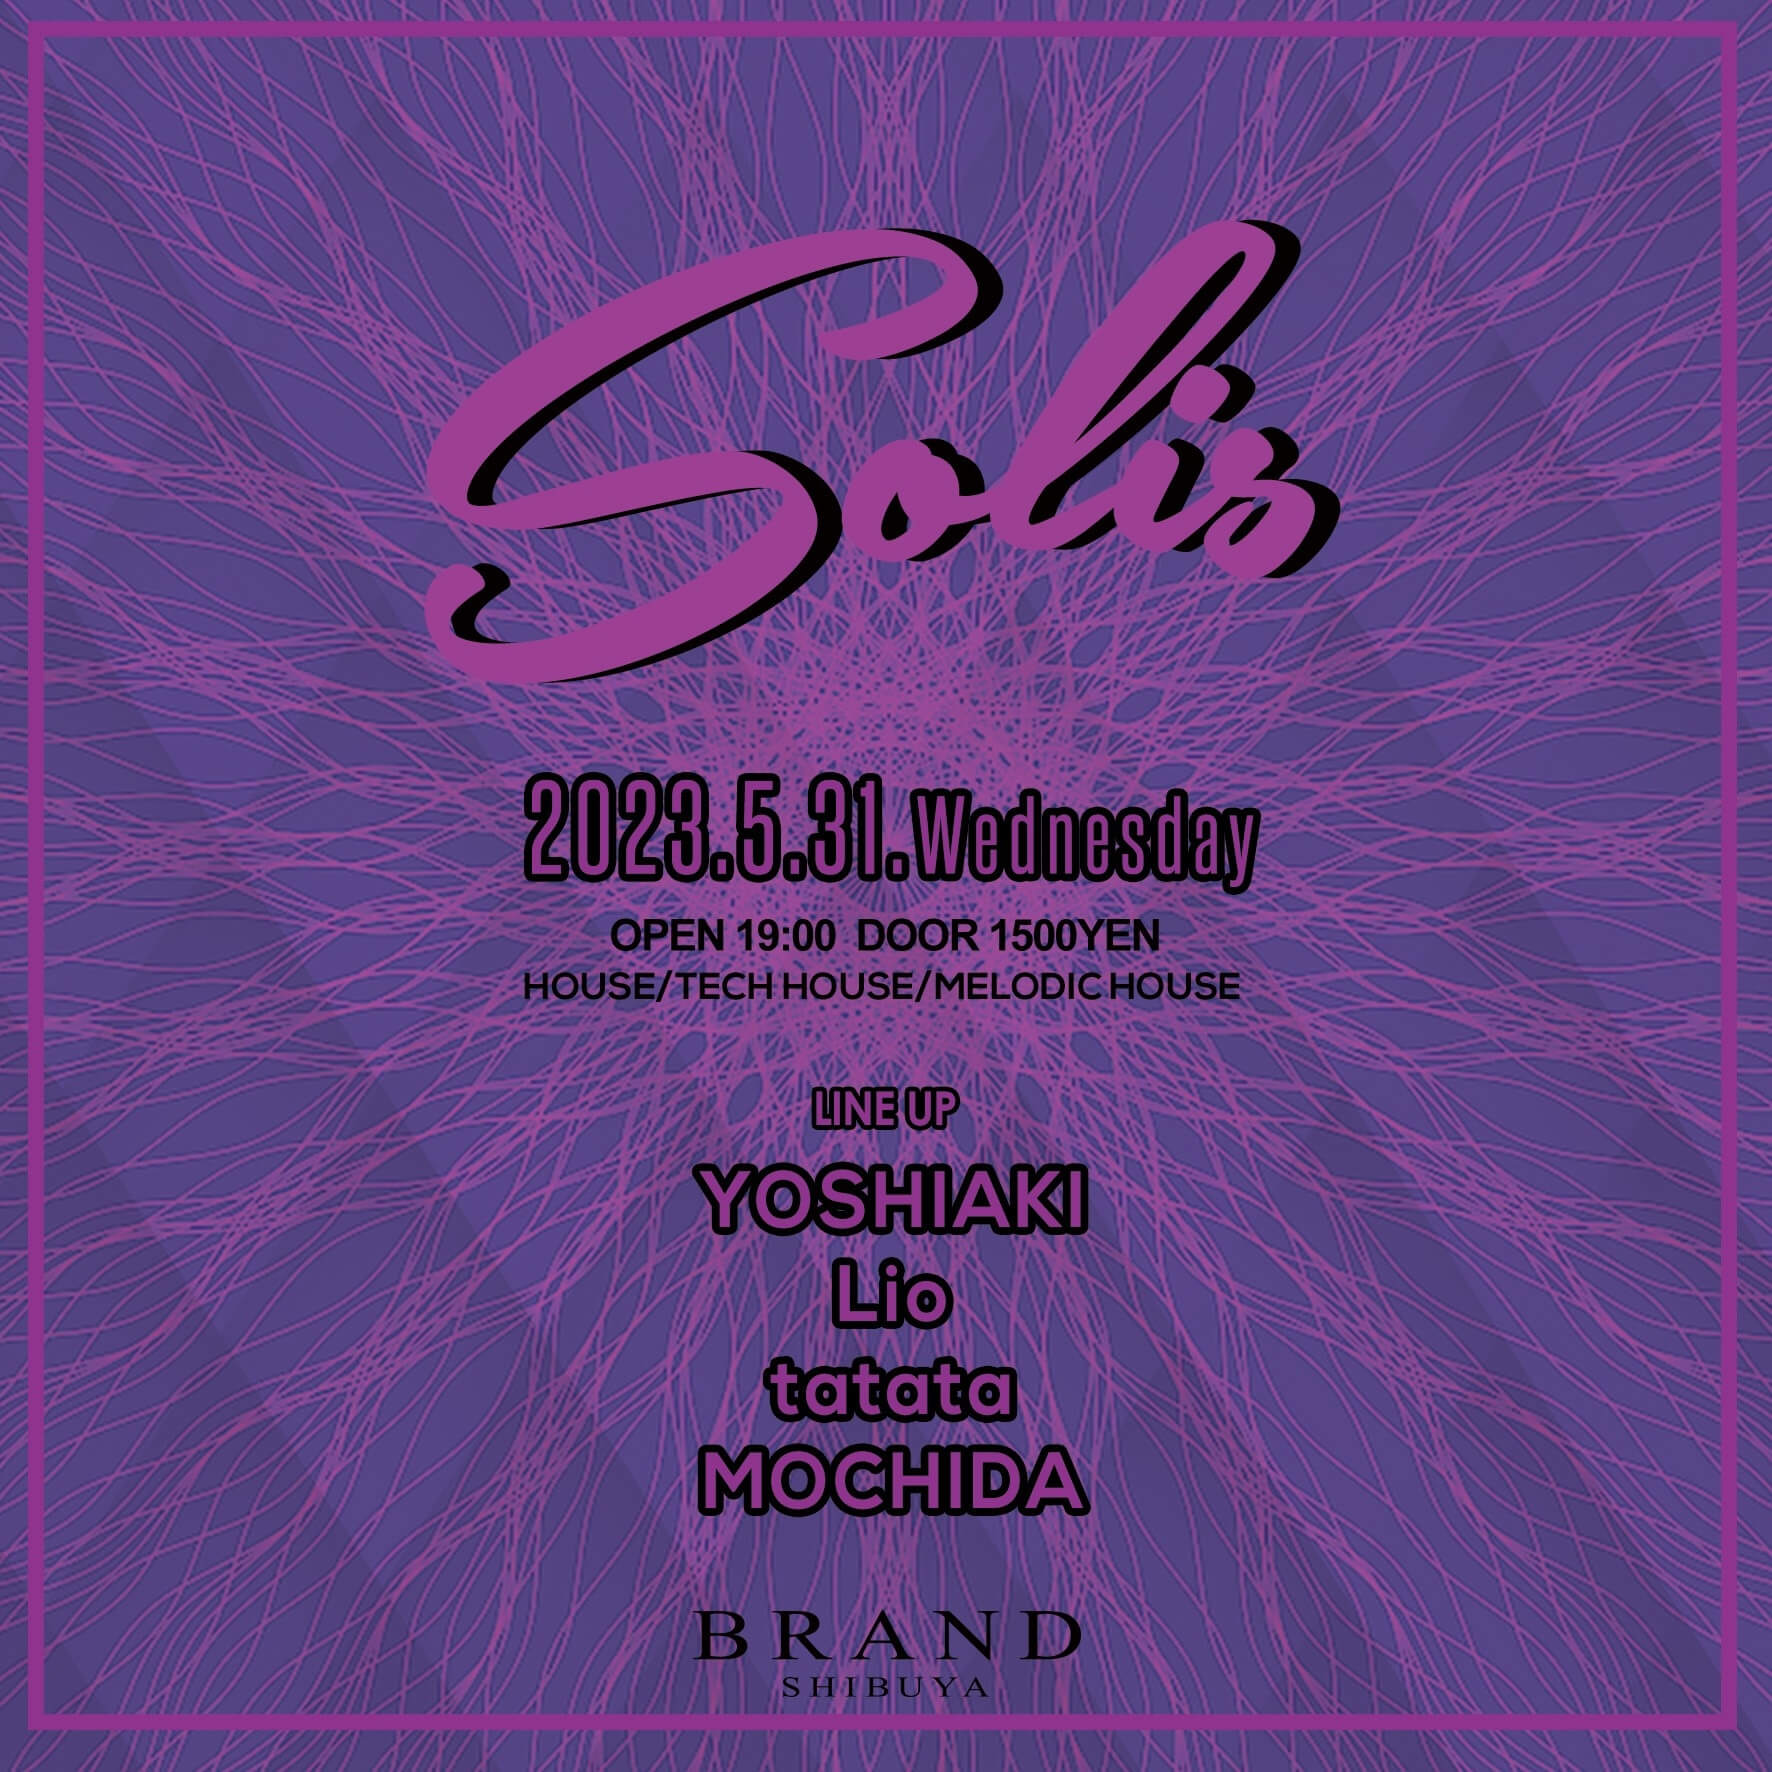 Sakin 2023年05月31日（水曜日）に渋谷 クラブのBRAND SHIBUYAで開催されるHOUSEイベント